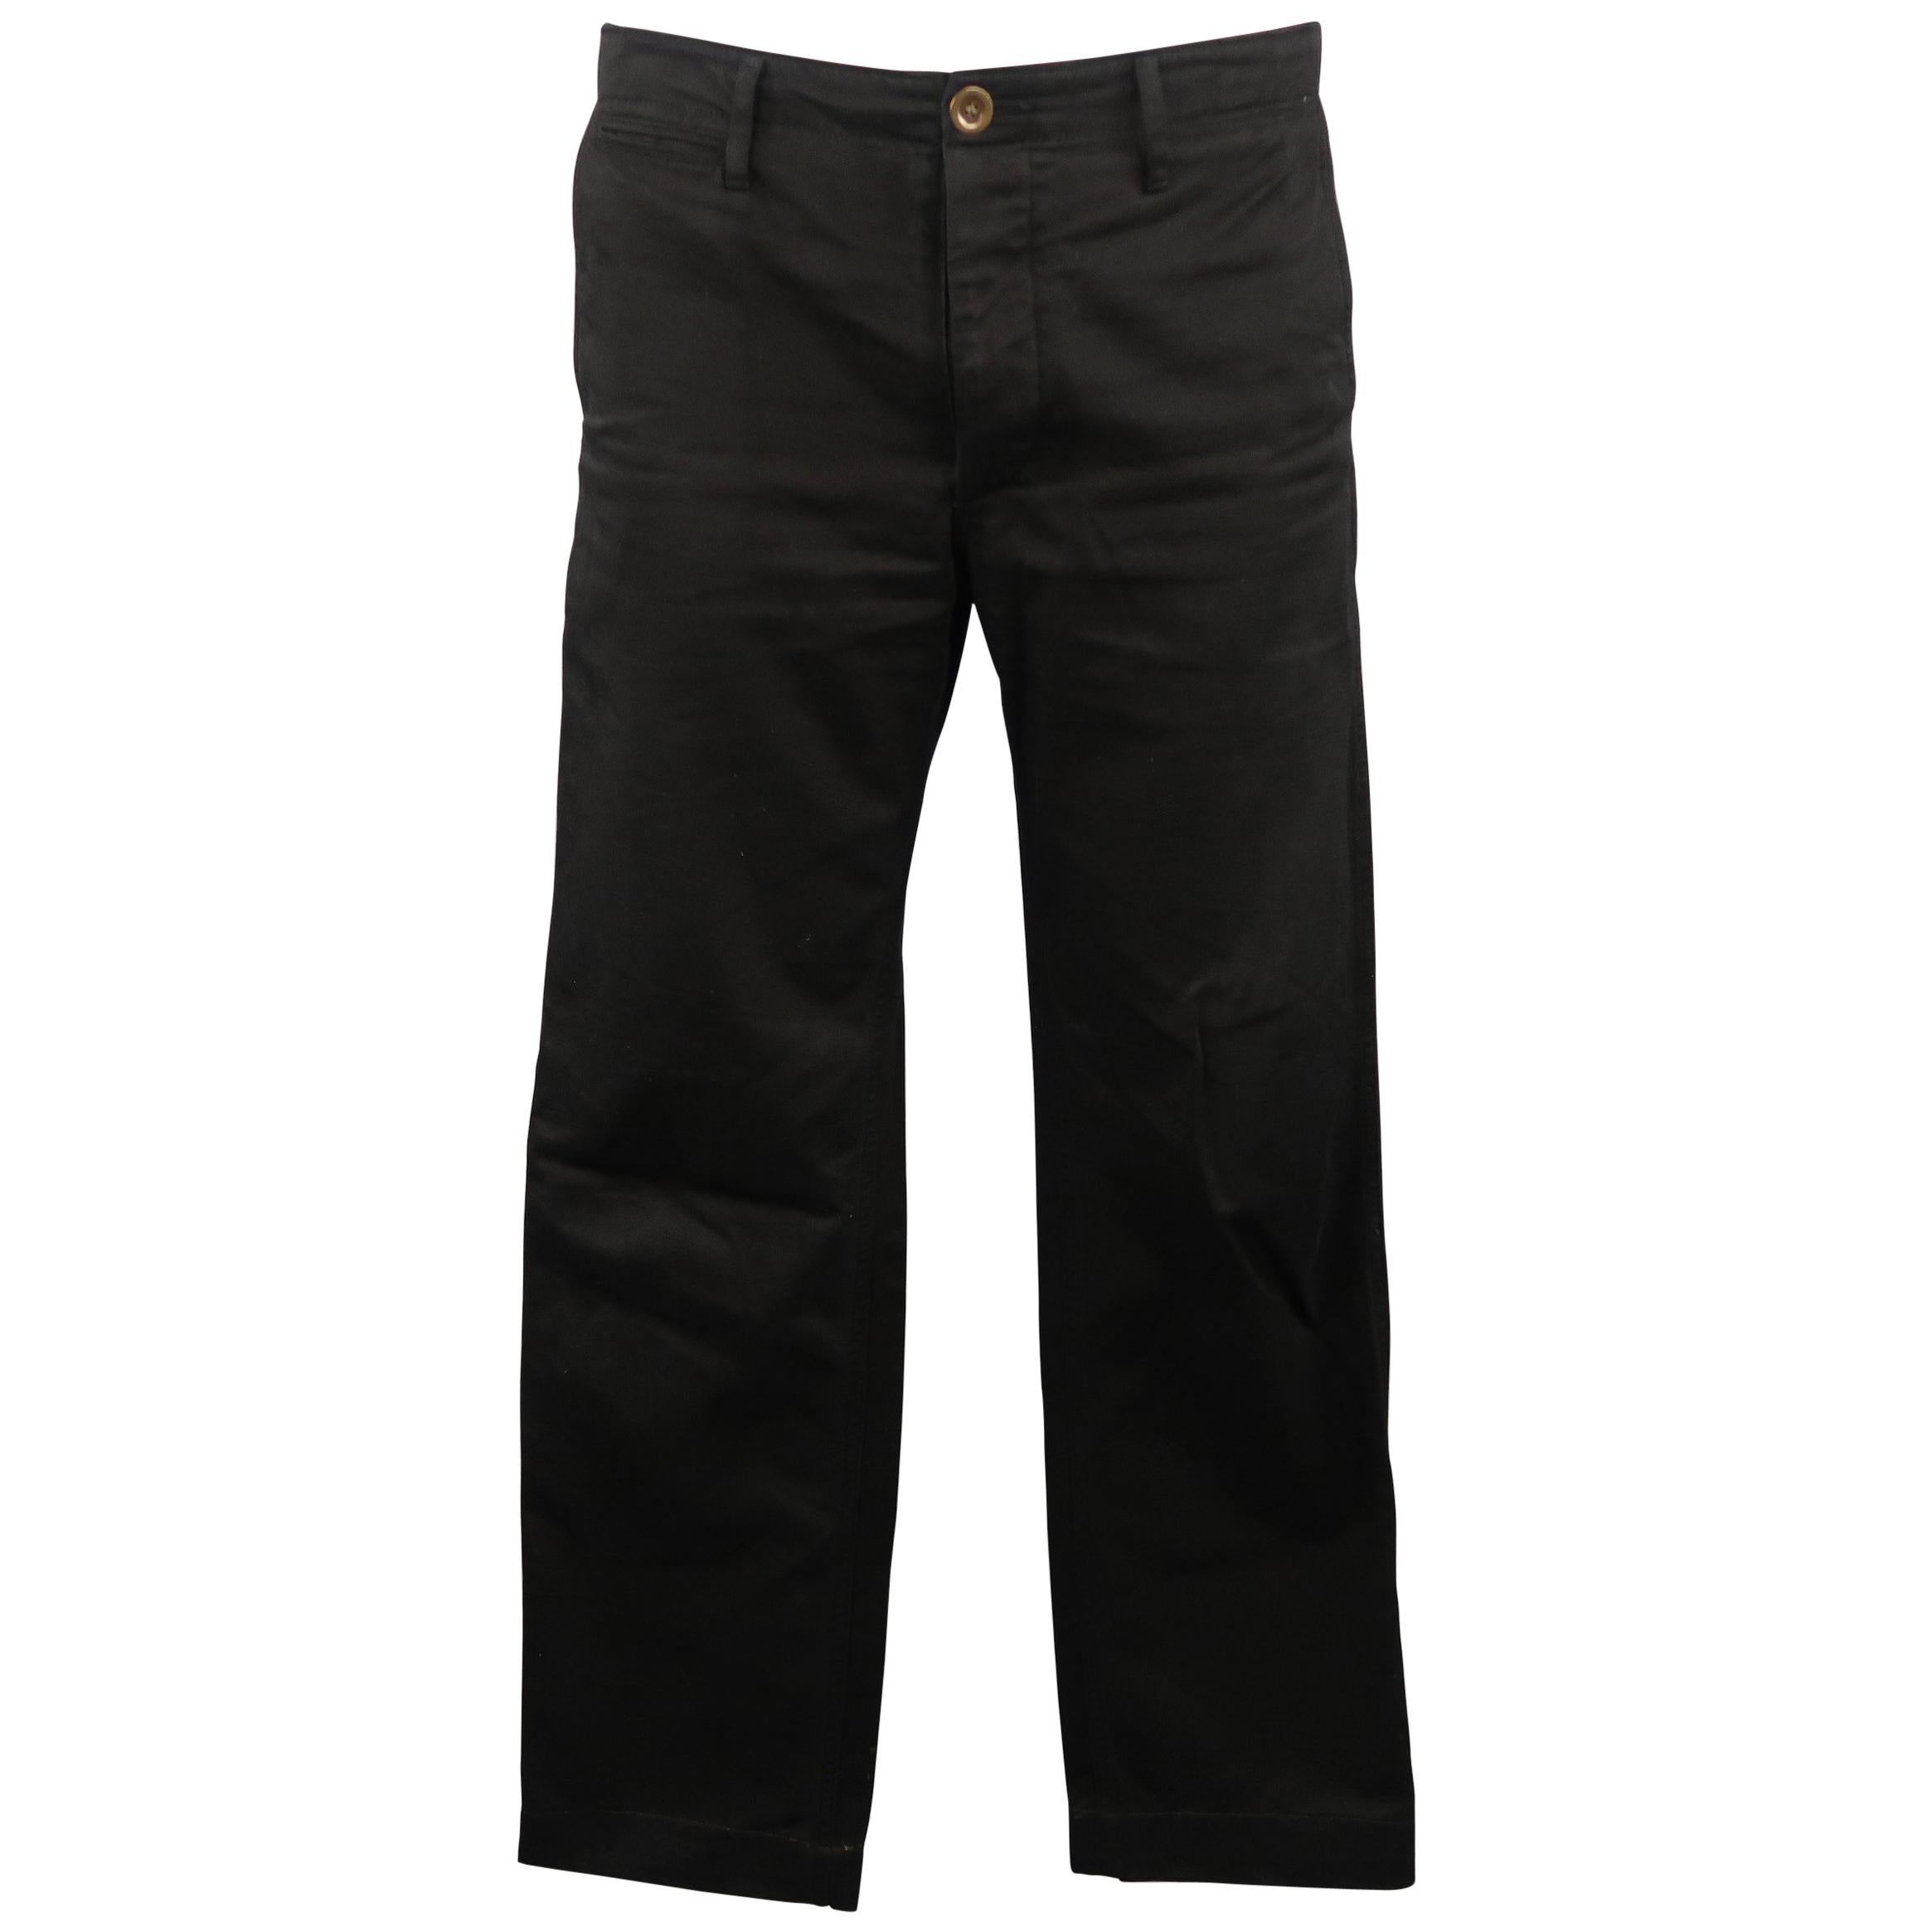 VISVIM Size 36 Black Solid Cotton Slim Chino Casual Pants